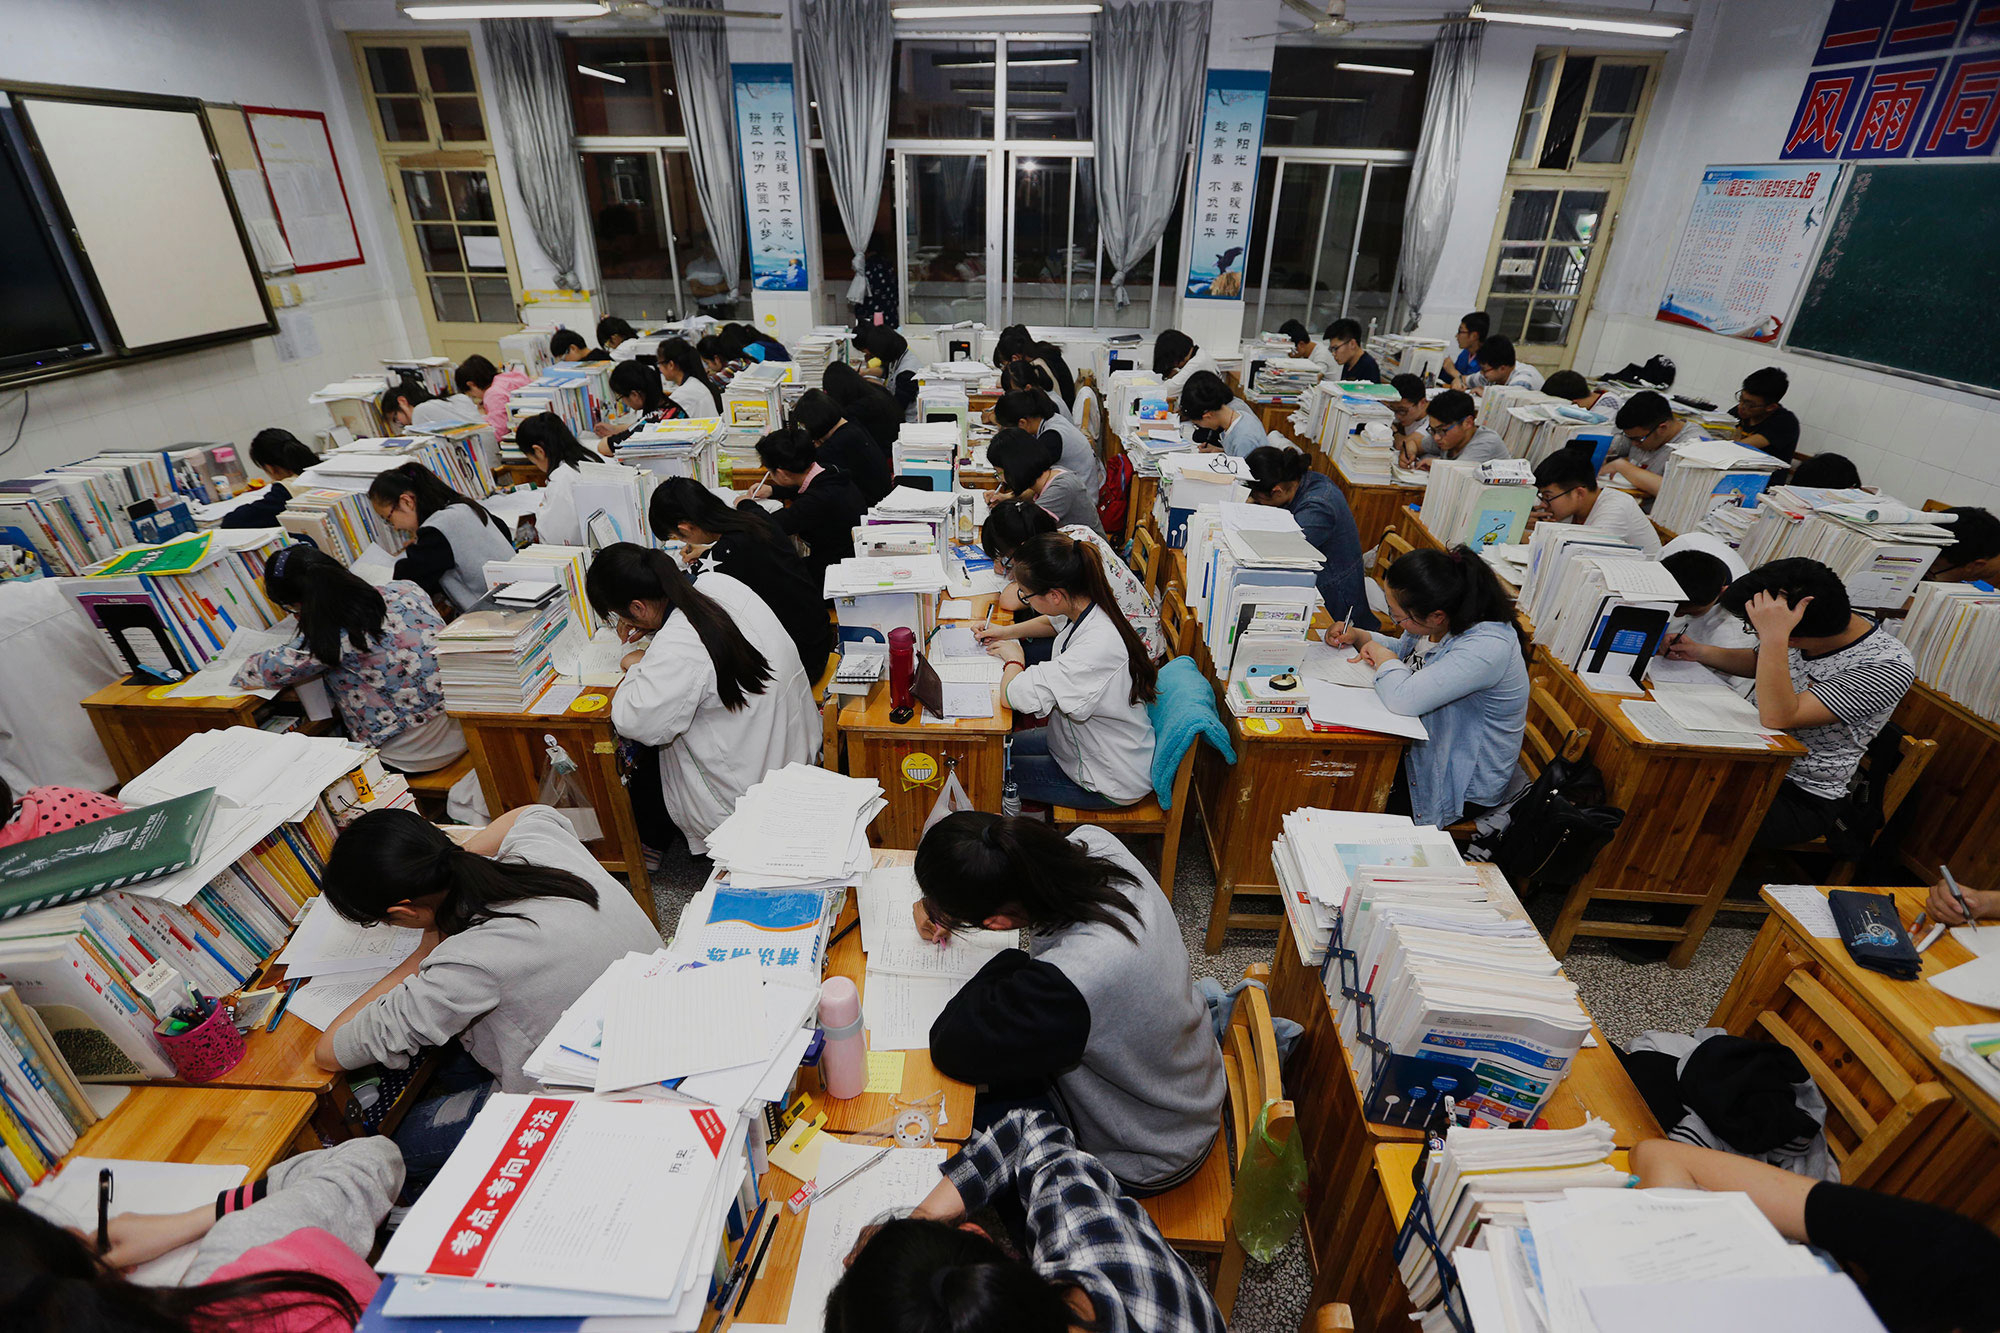 Is Beijing education good?